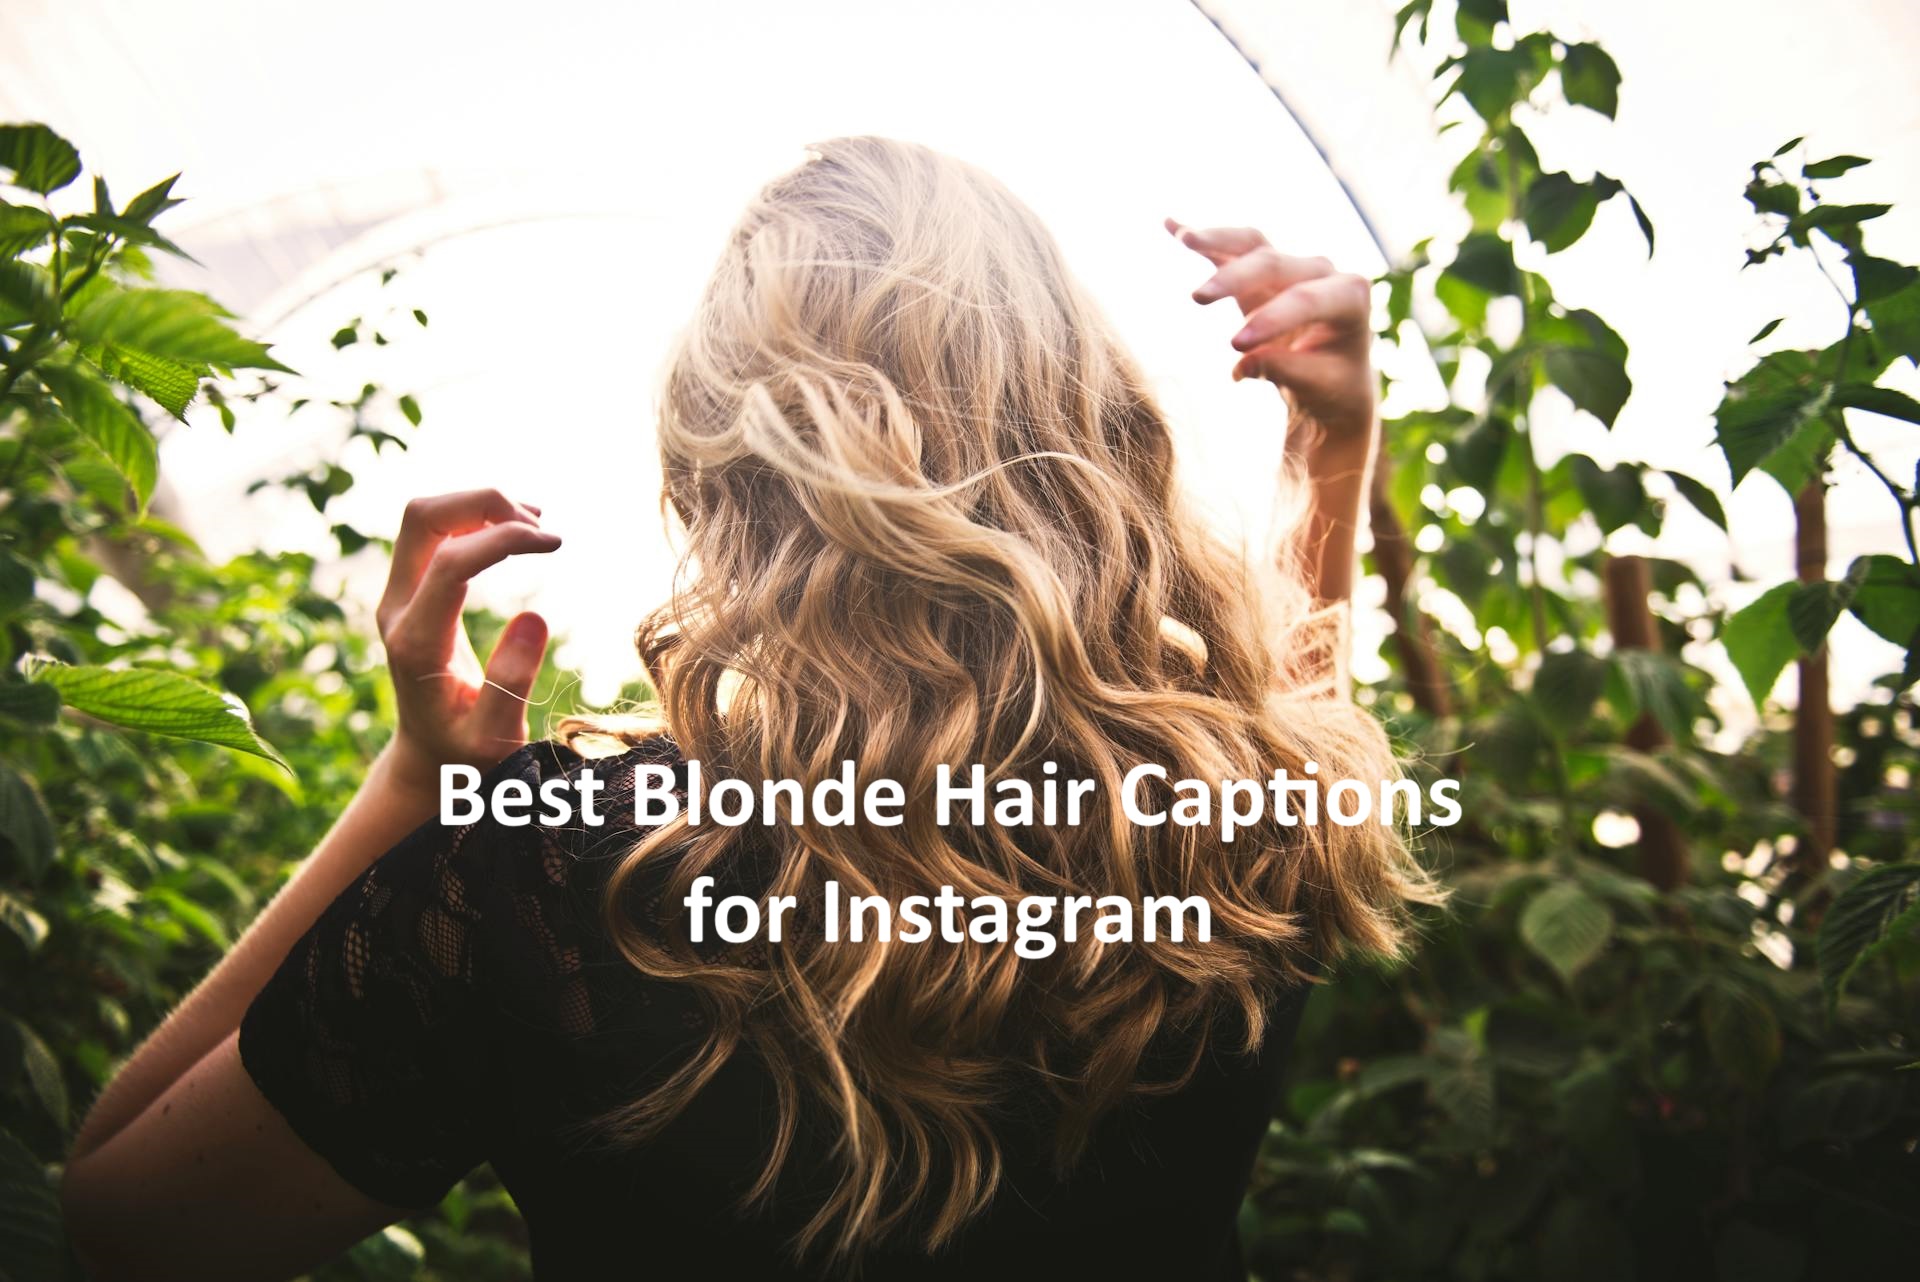 Blonde Hair Captions for Instagram